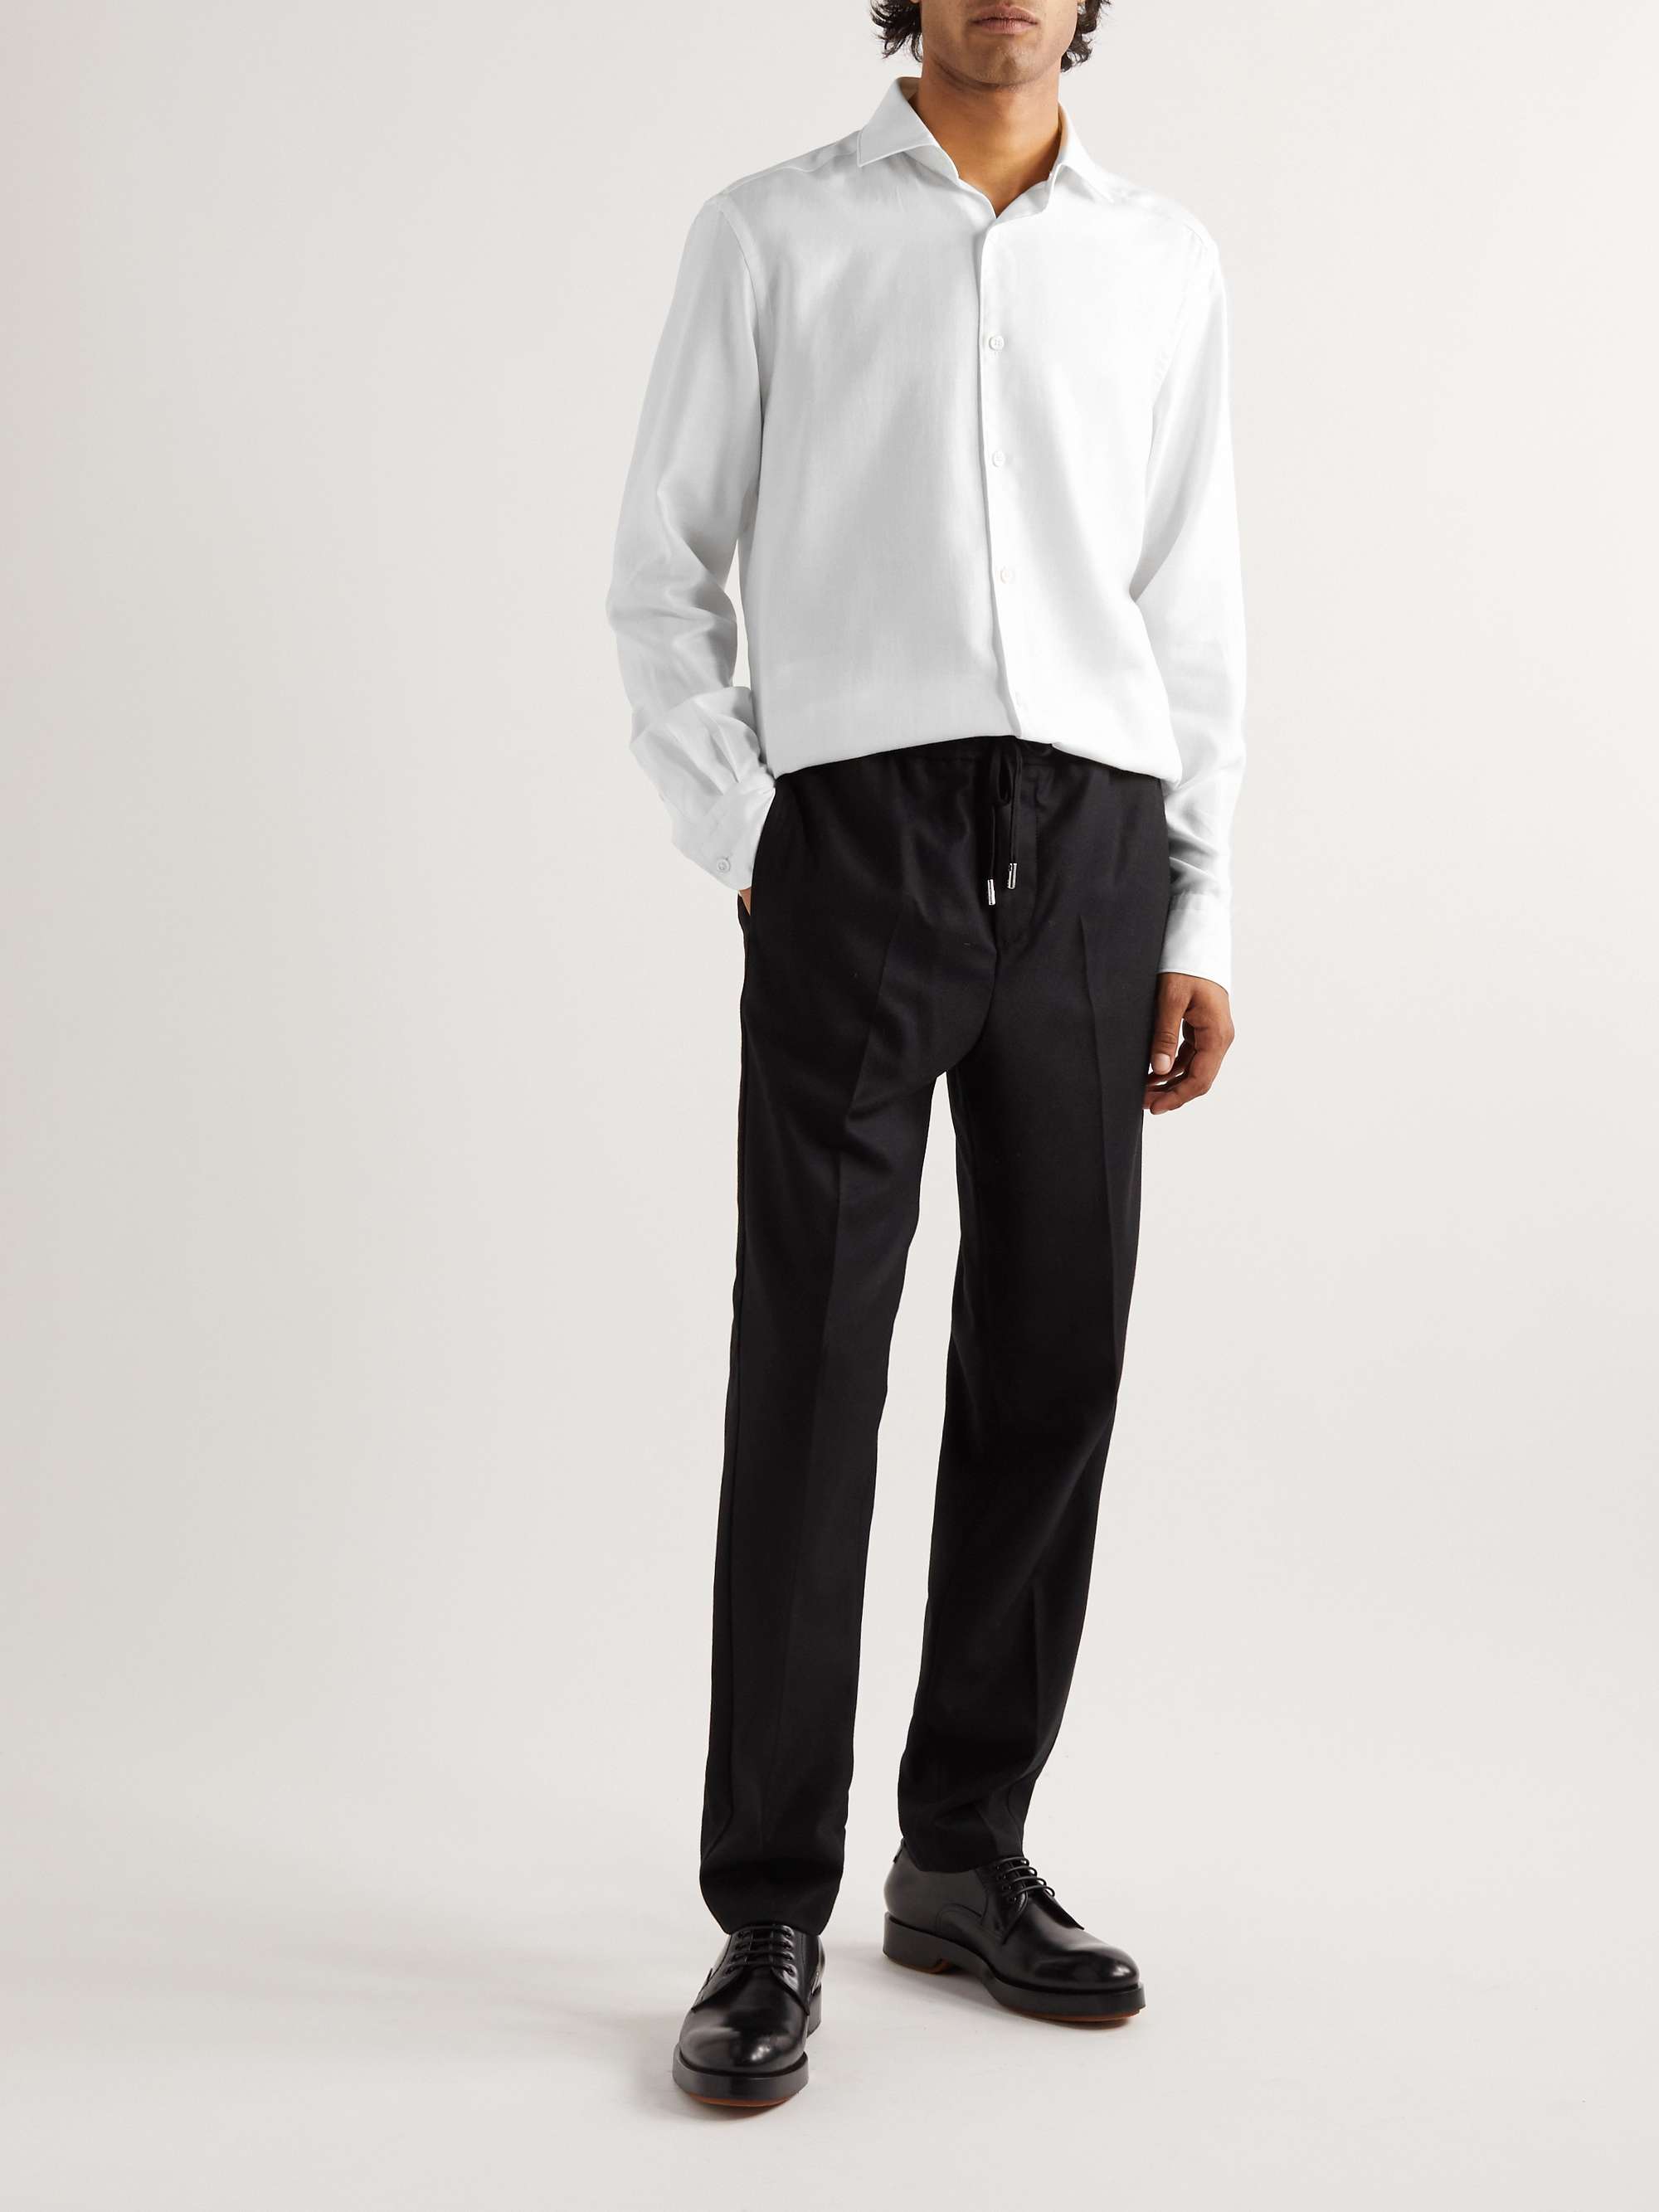 ZEGNA Slim-Fit Cotton and Cashmere-Blend Shirt